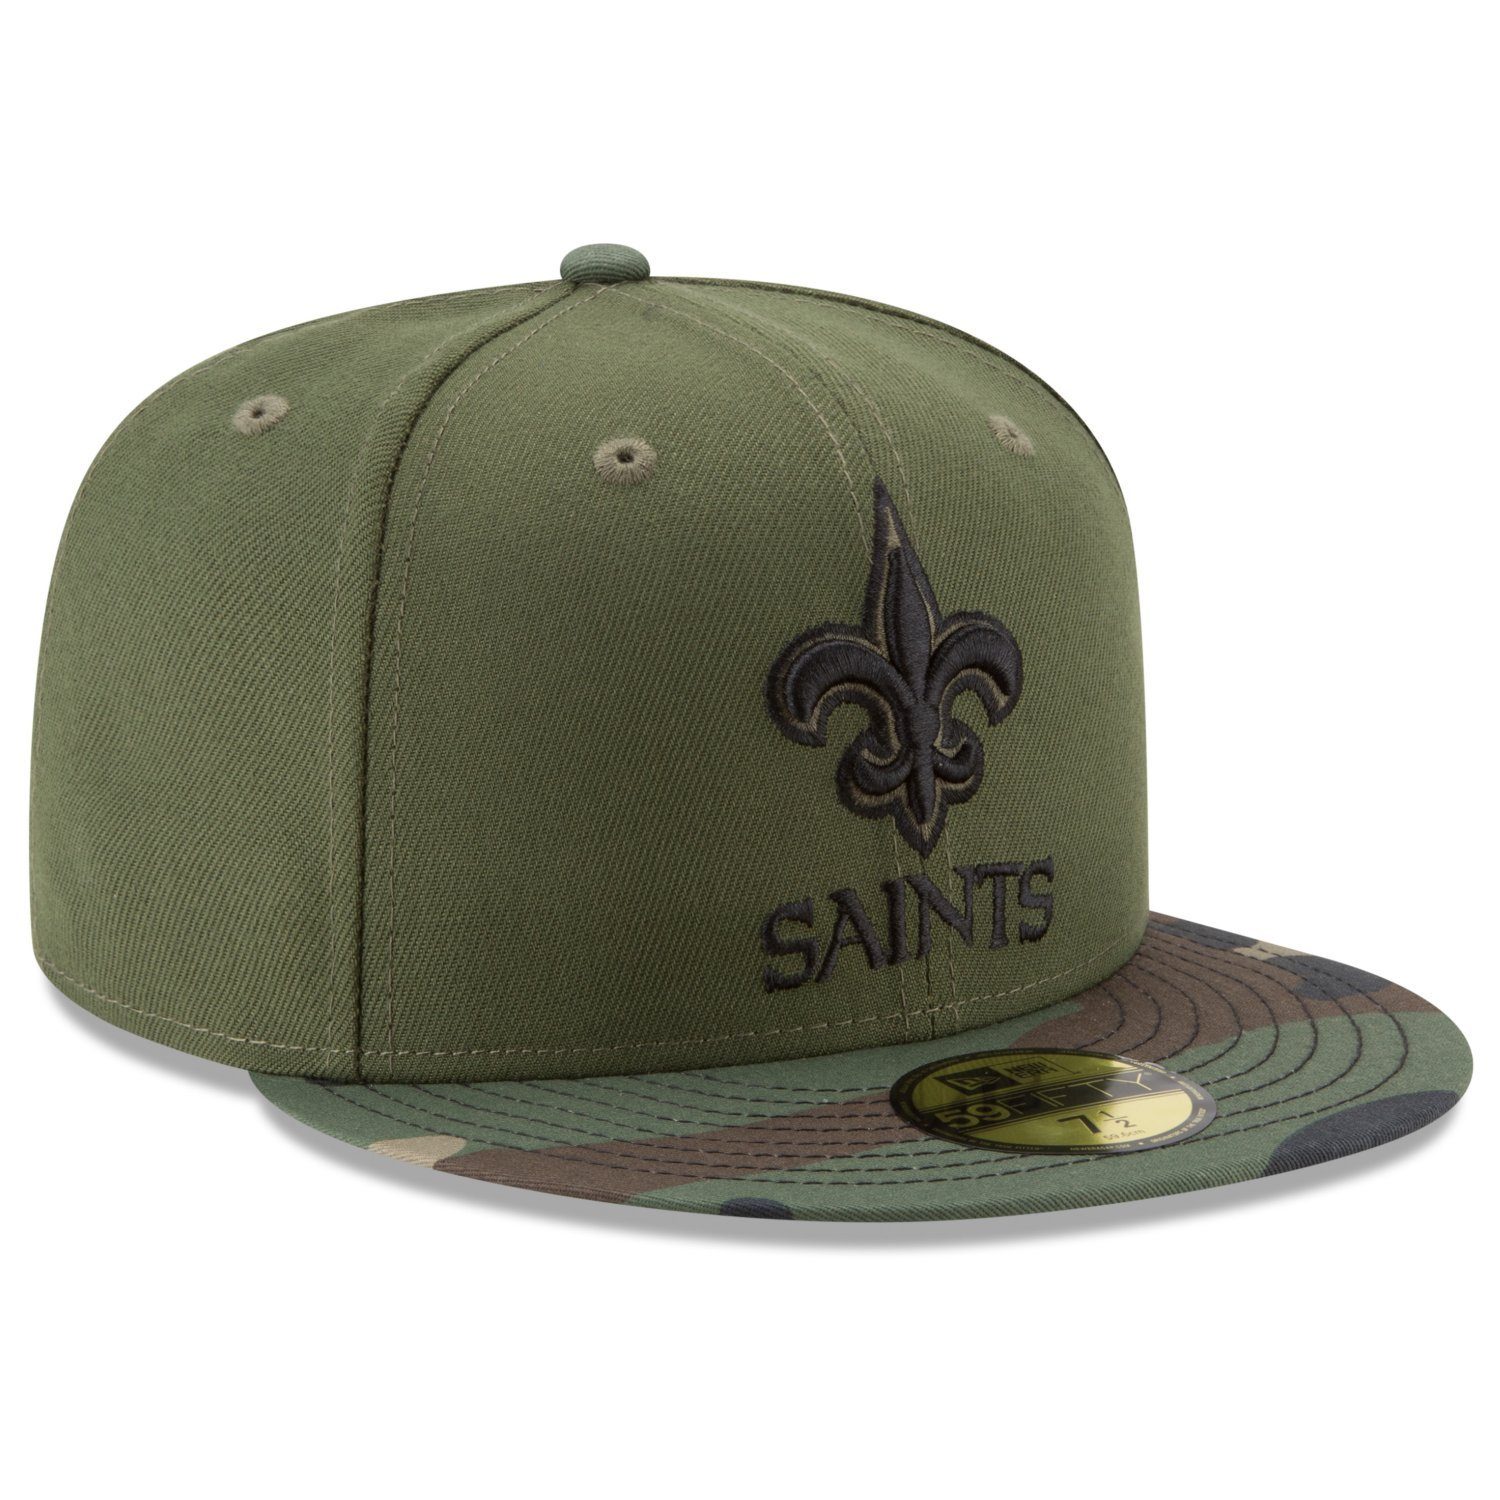 Herren Caps New Era Fitted Cap 59Fifty New Orleans Saints